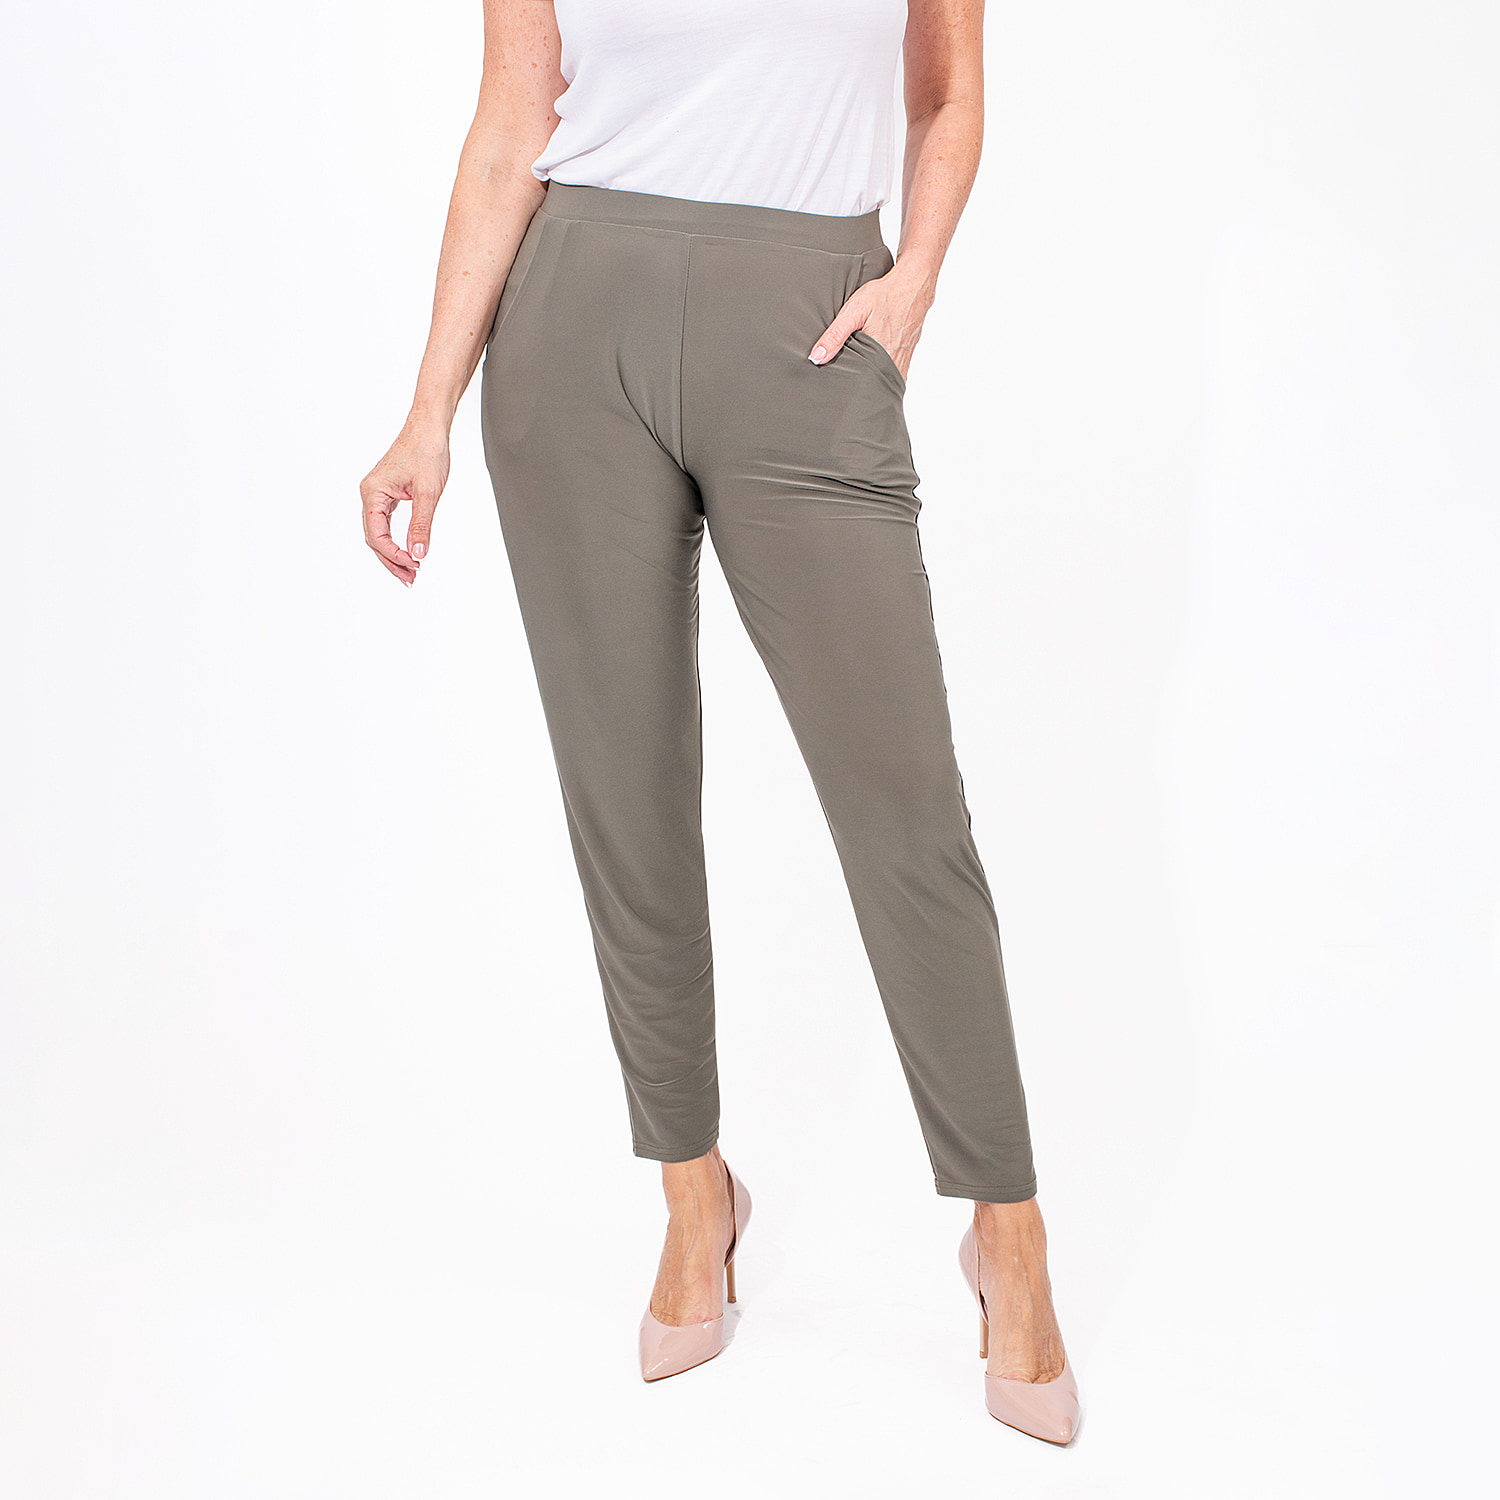 Polyester-Jean-and-Pant-Trouser-Size-1x1-cm-Khaki